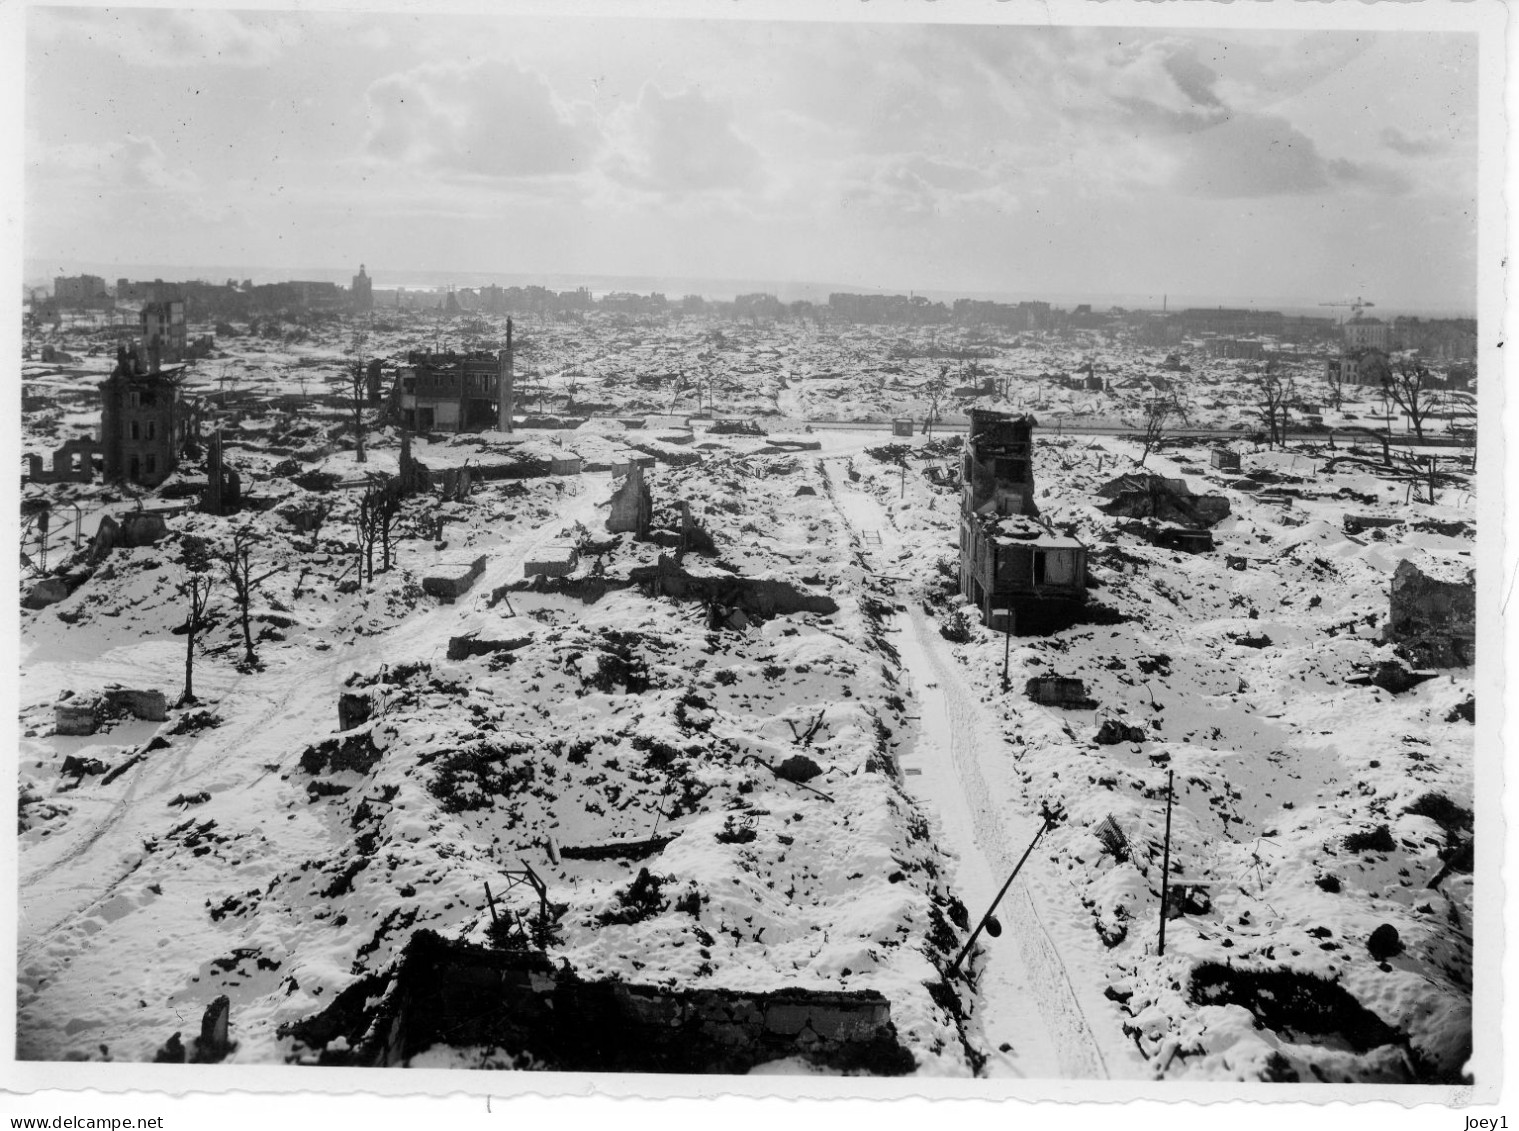 Photo Le Havre Bombardé 1944,photographe Gilbert Fernez,format 13/18 - War, Military